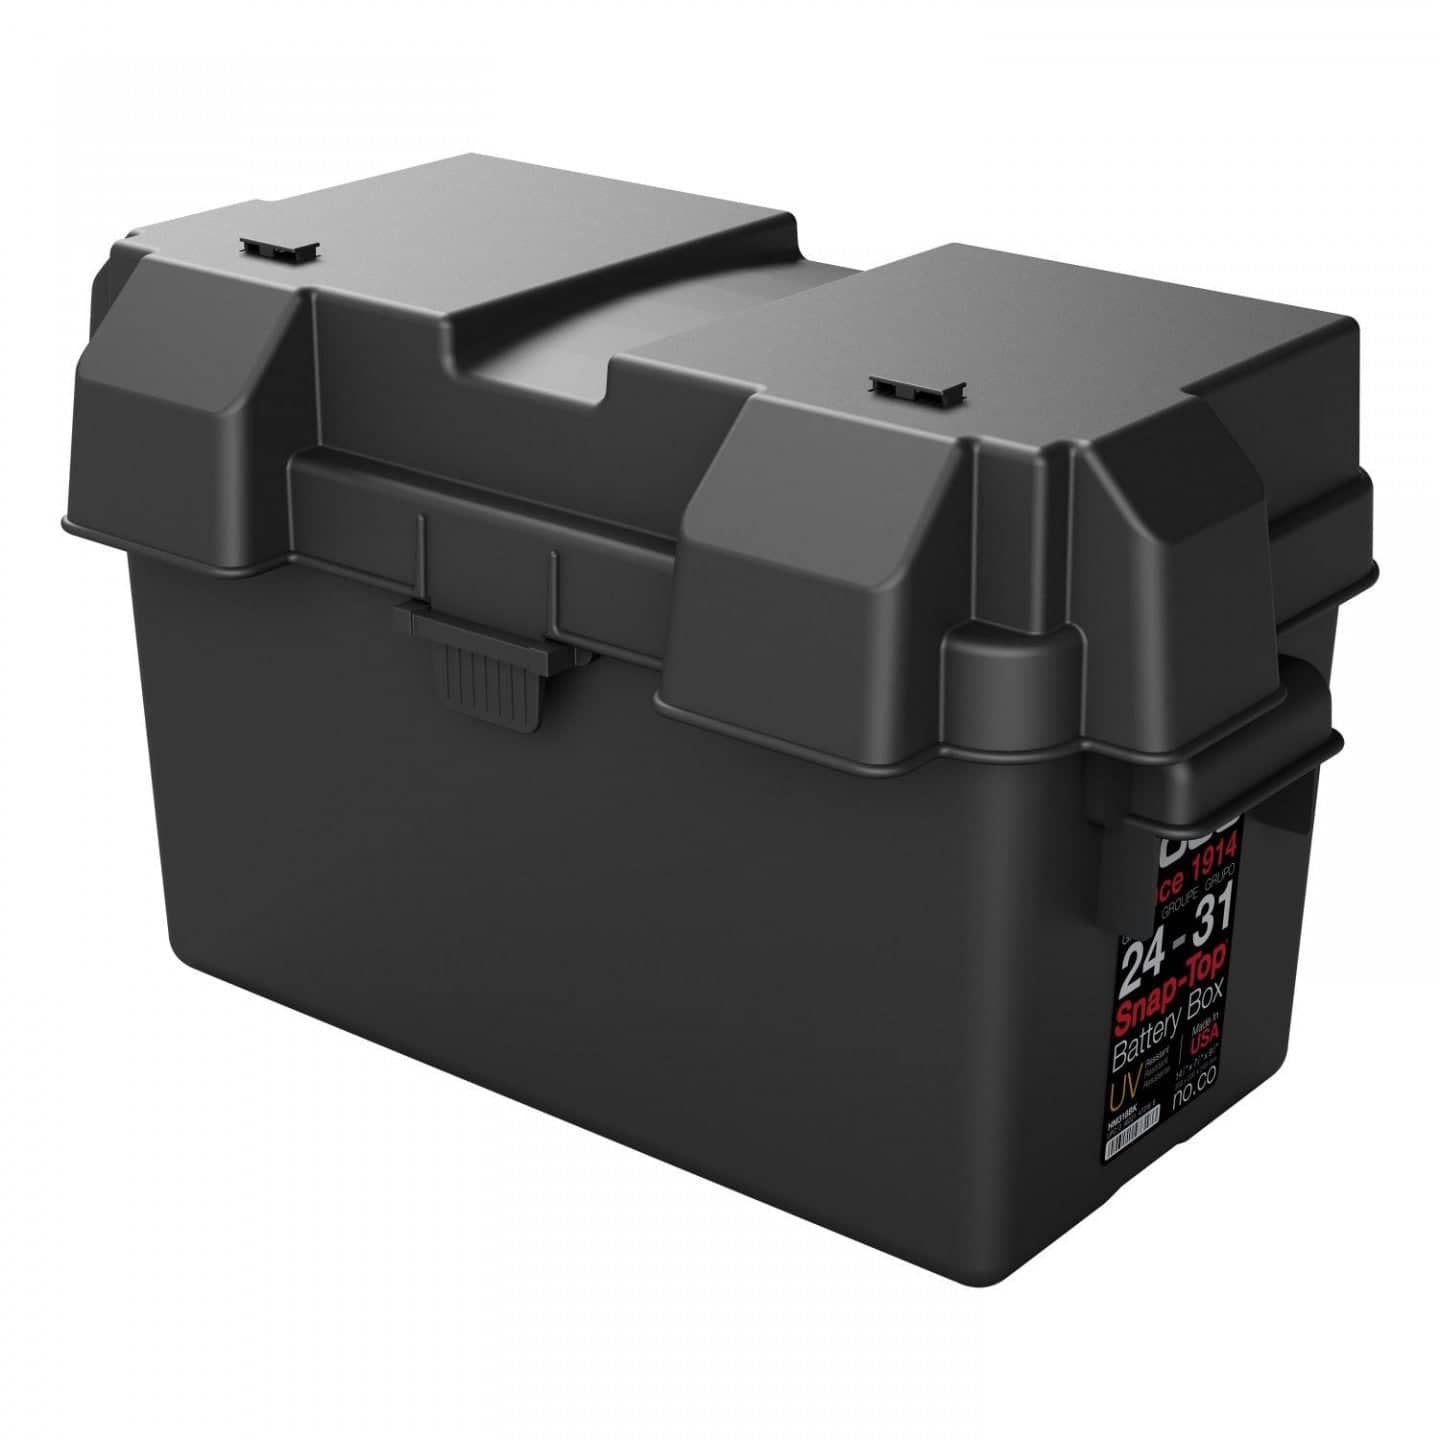 Noco - Battery Box Black GRP 24-31 Snap Top   HM318-BKS